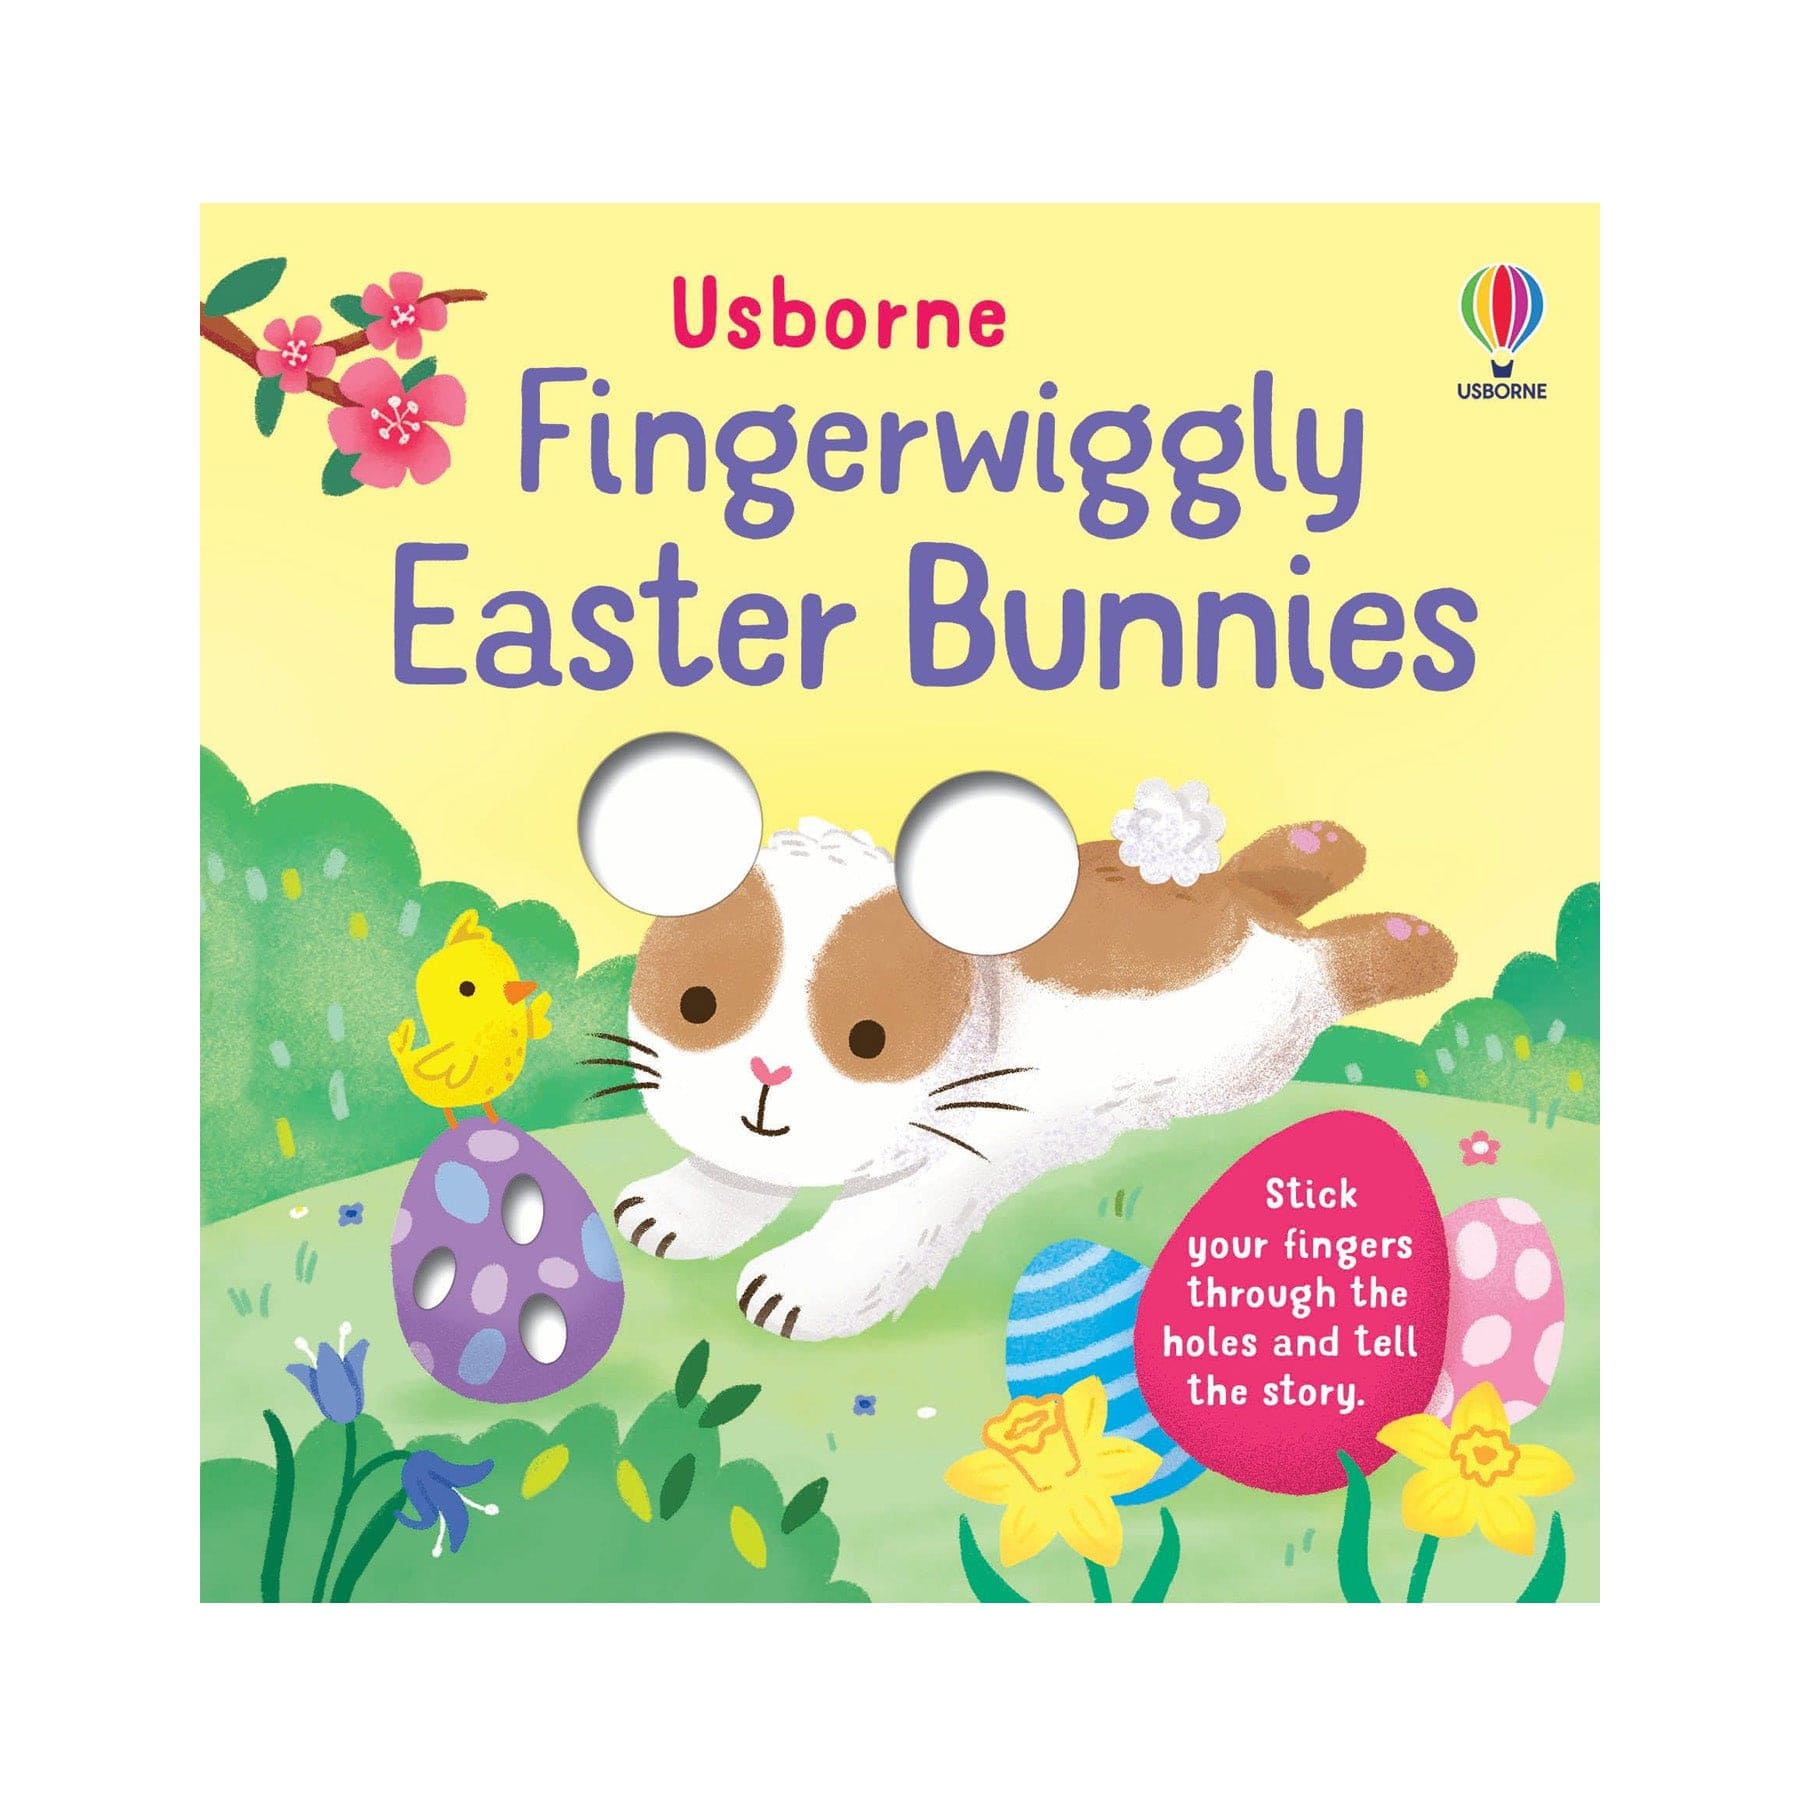 Fingerwiggly easter bunnies